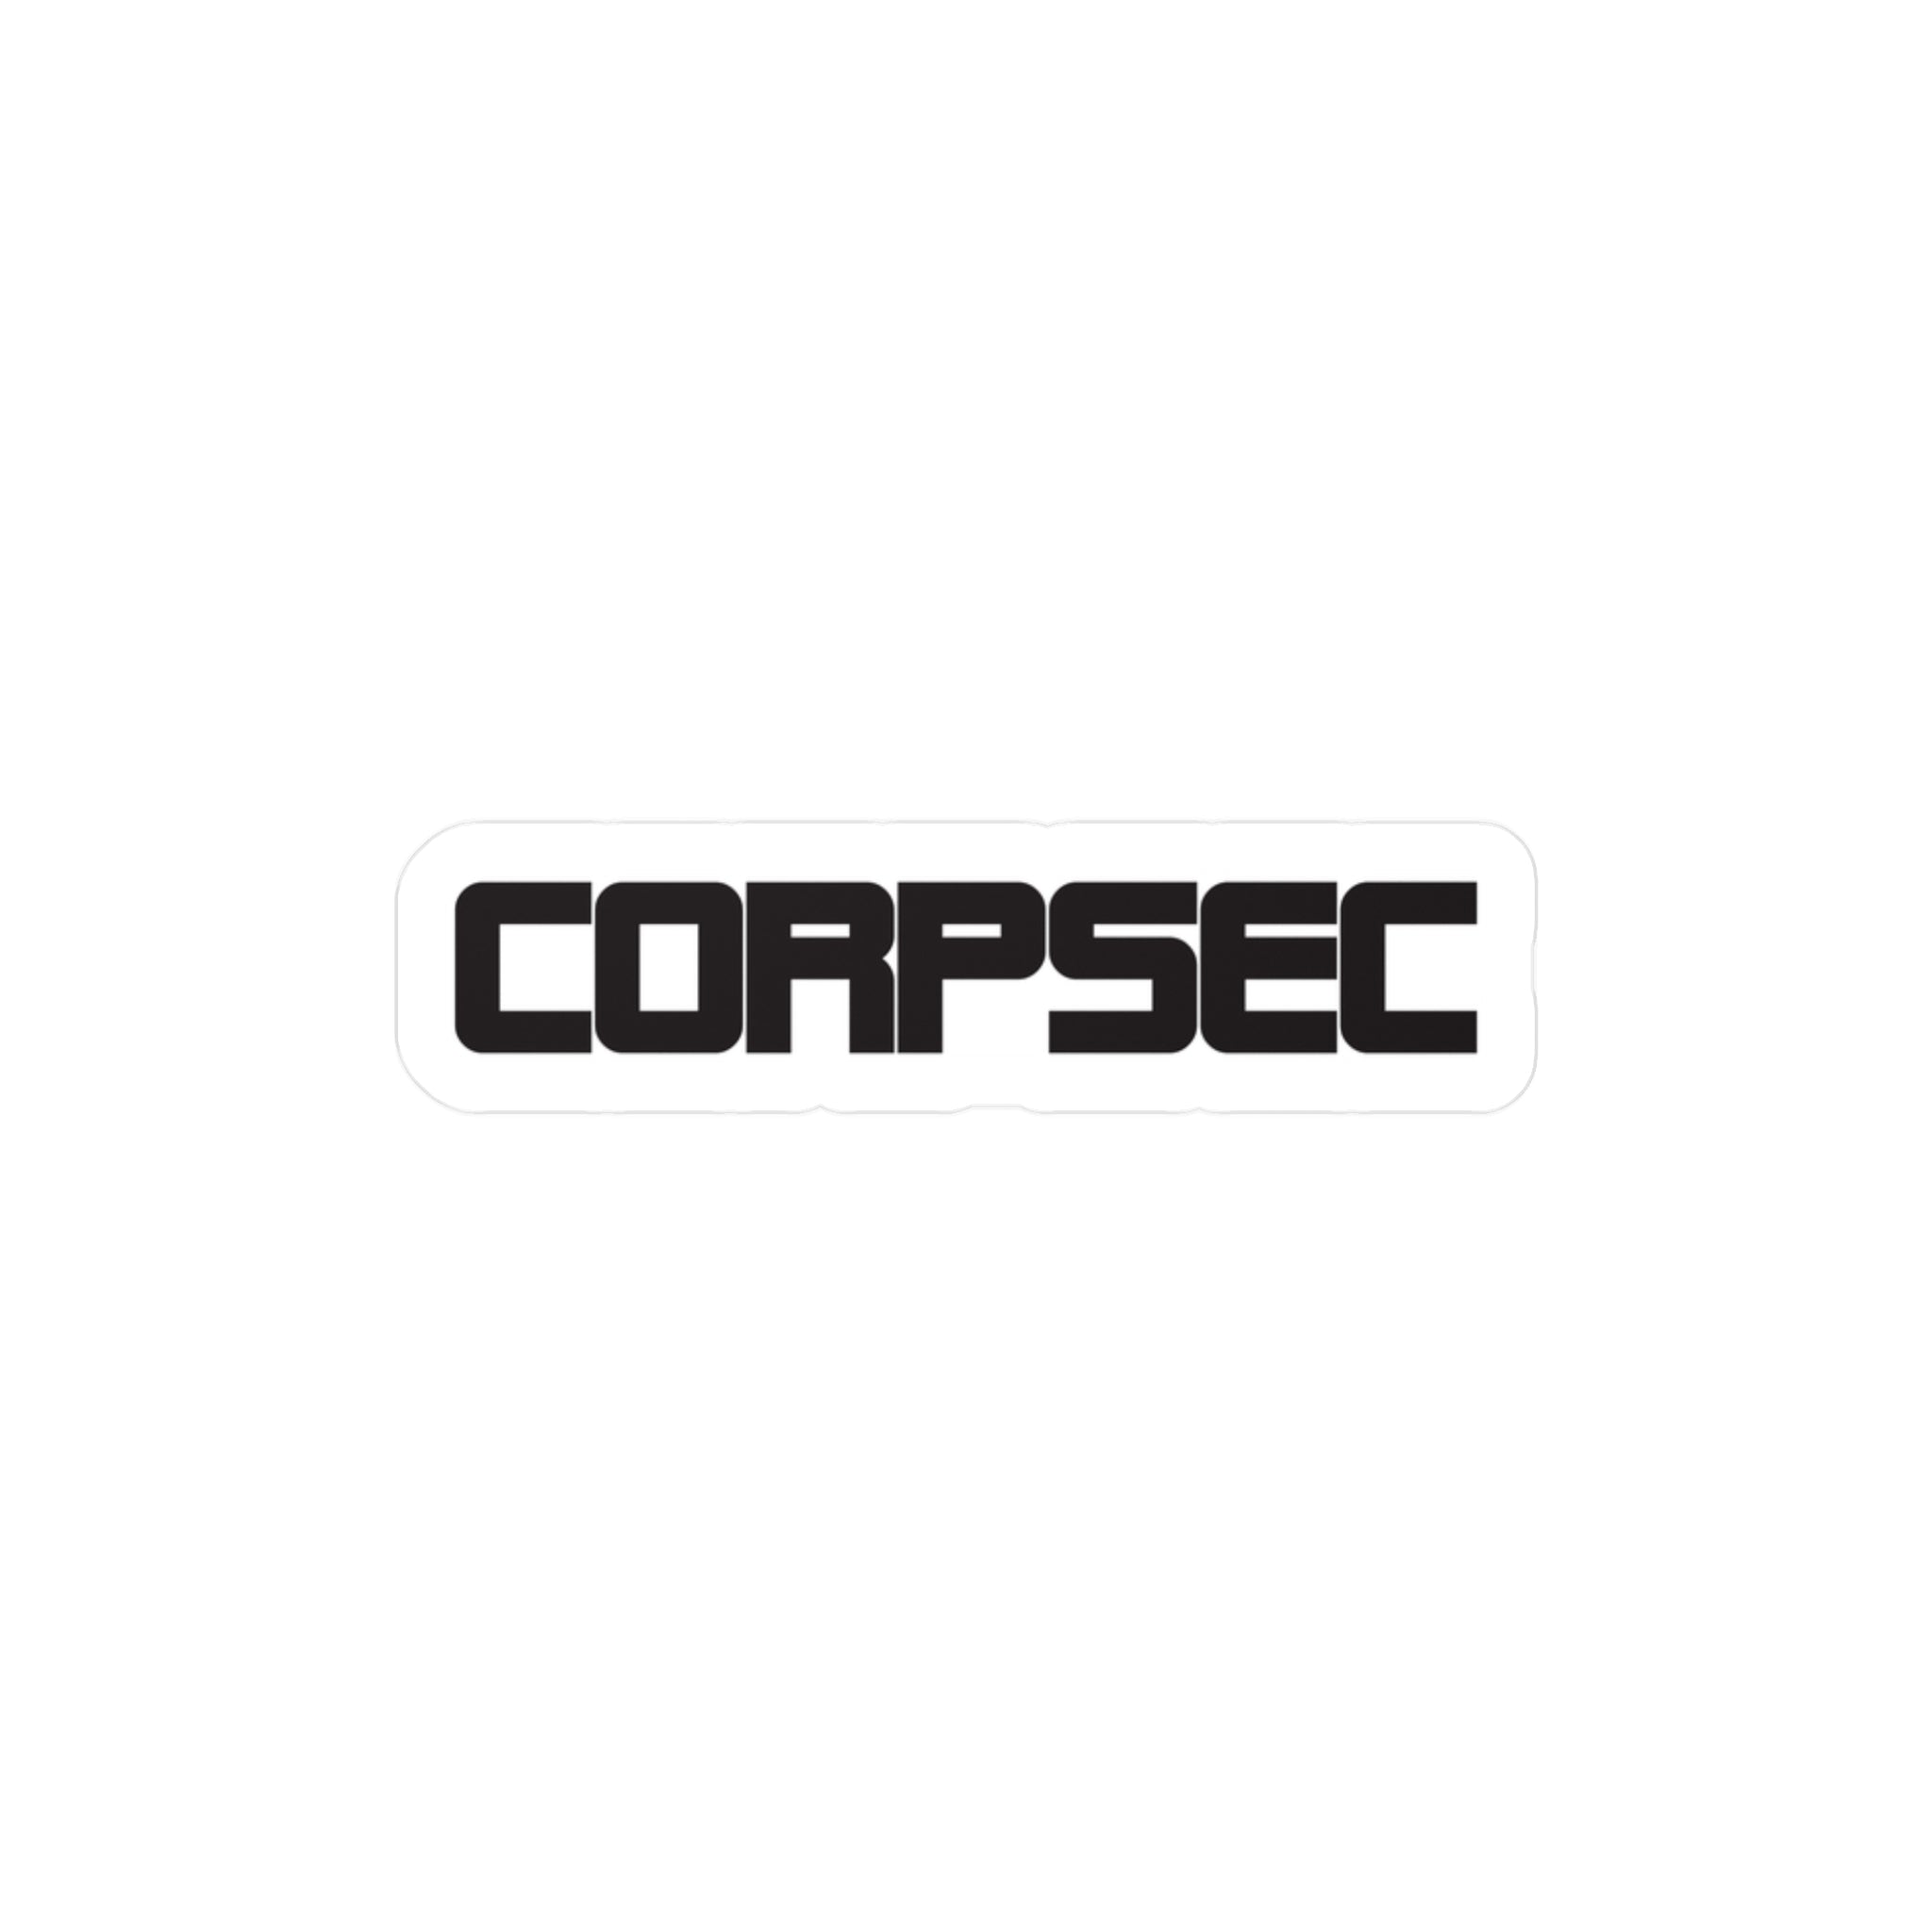 CORPSEC Sticker